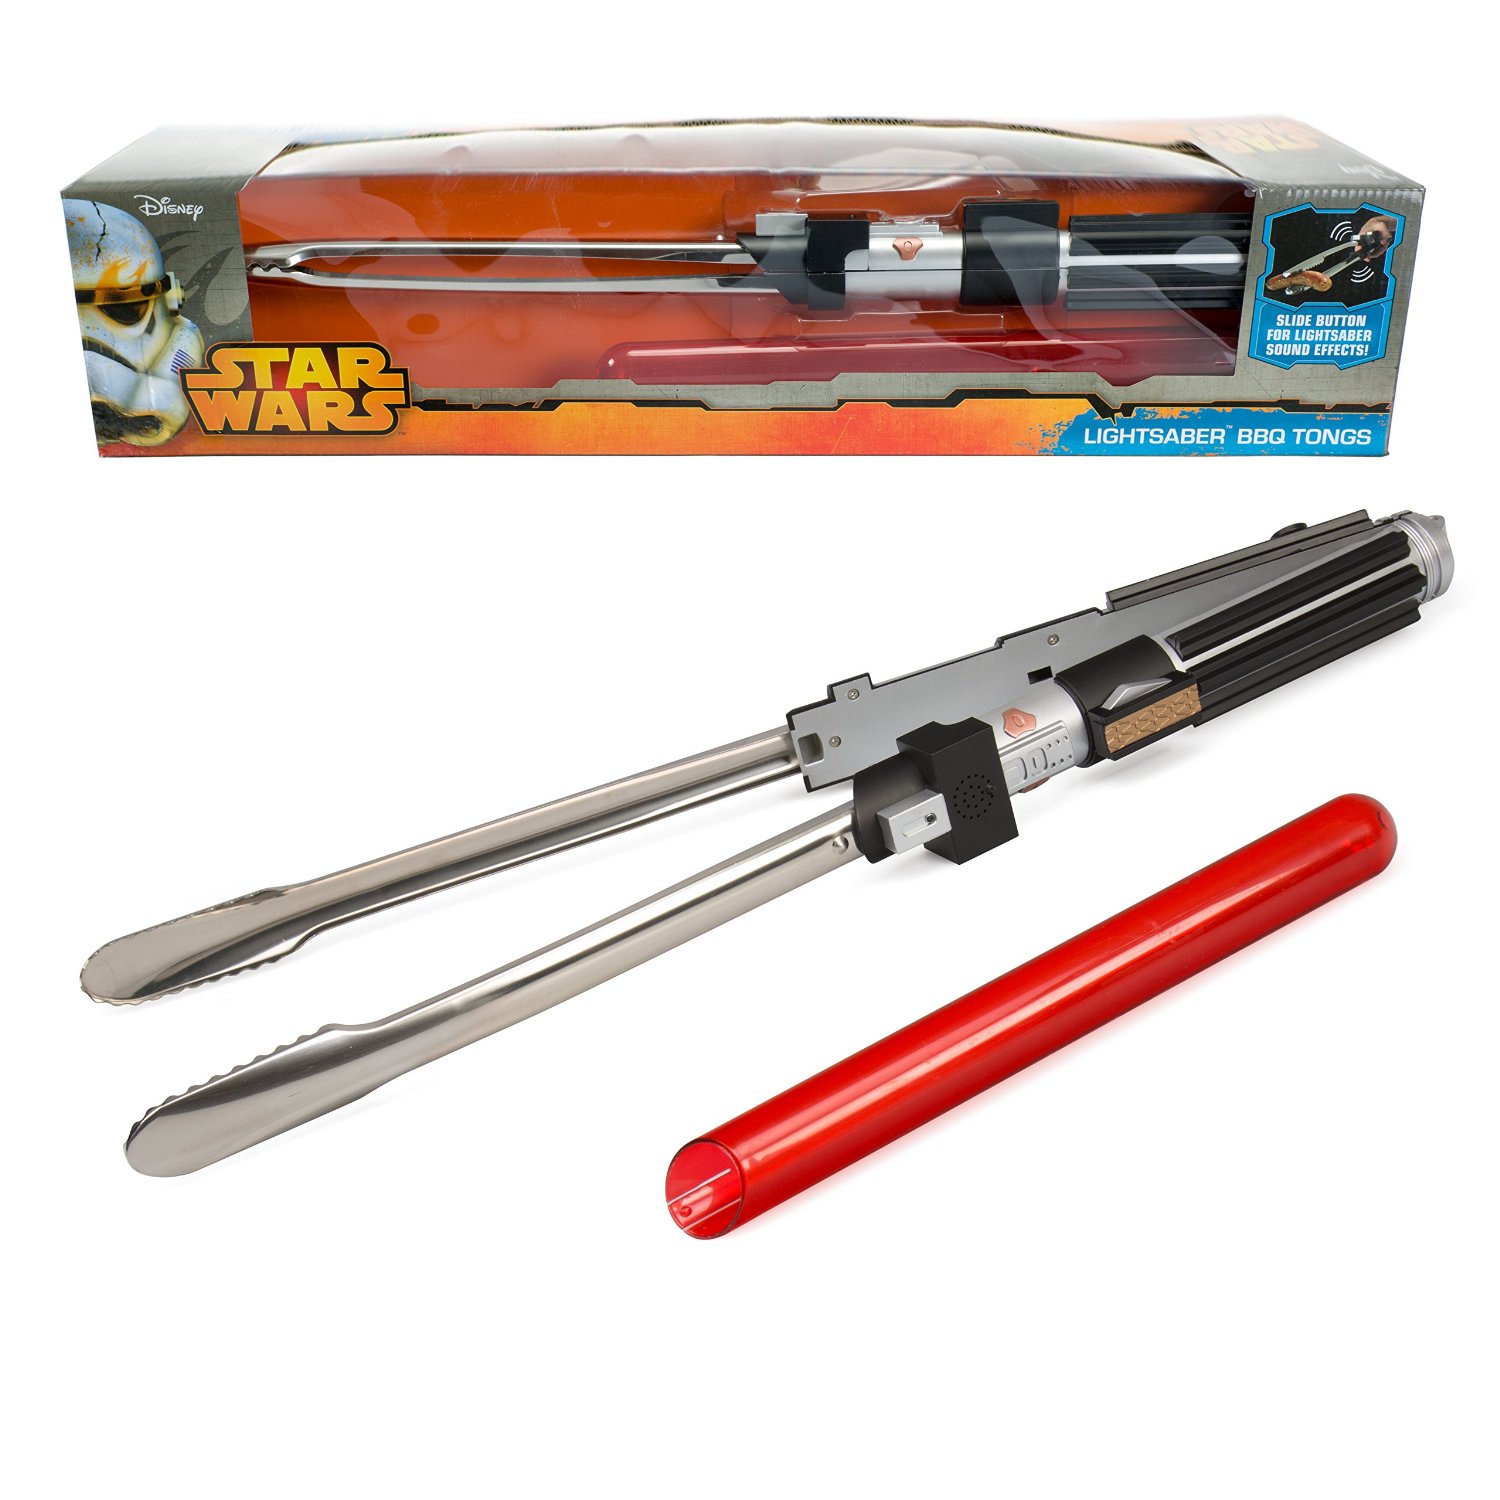 star wars grilling tools